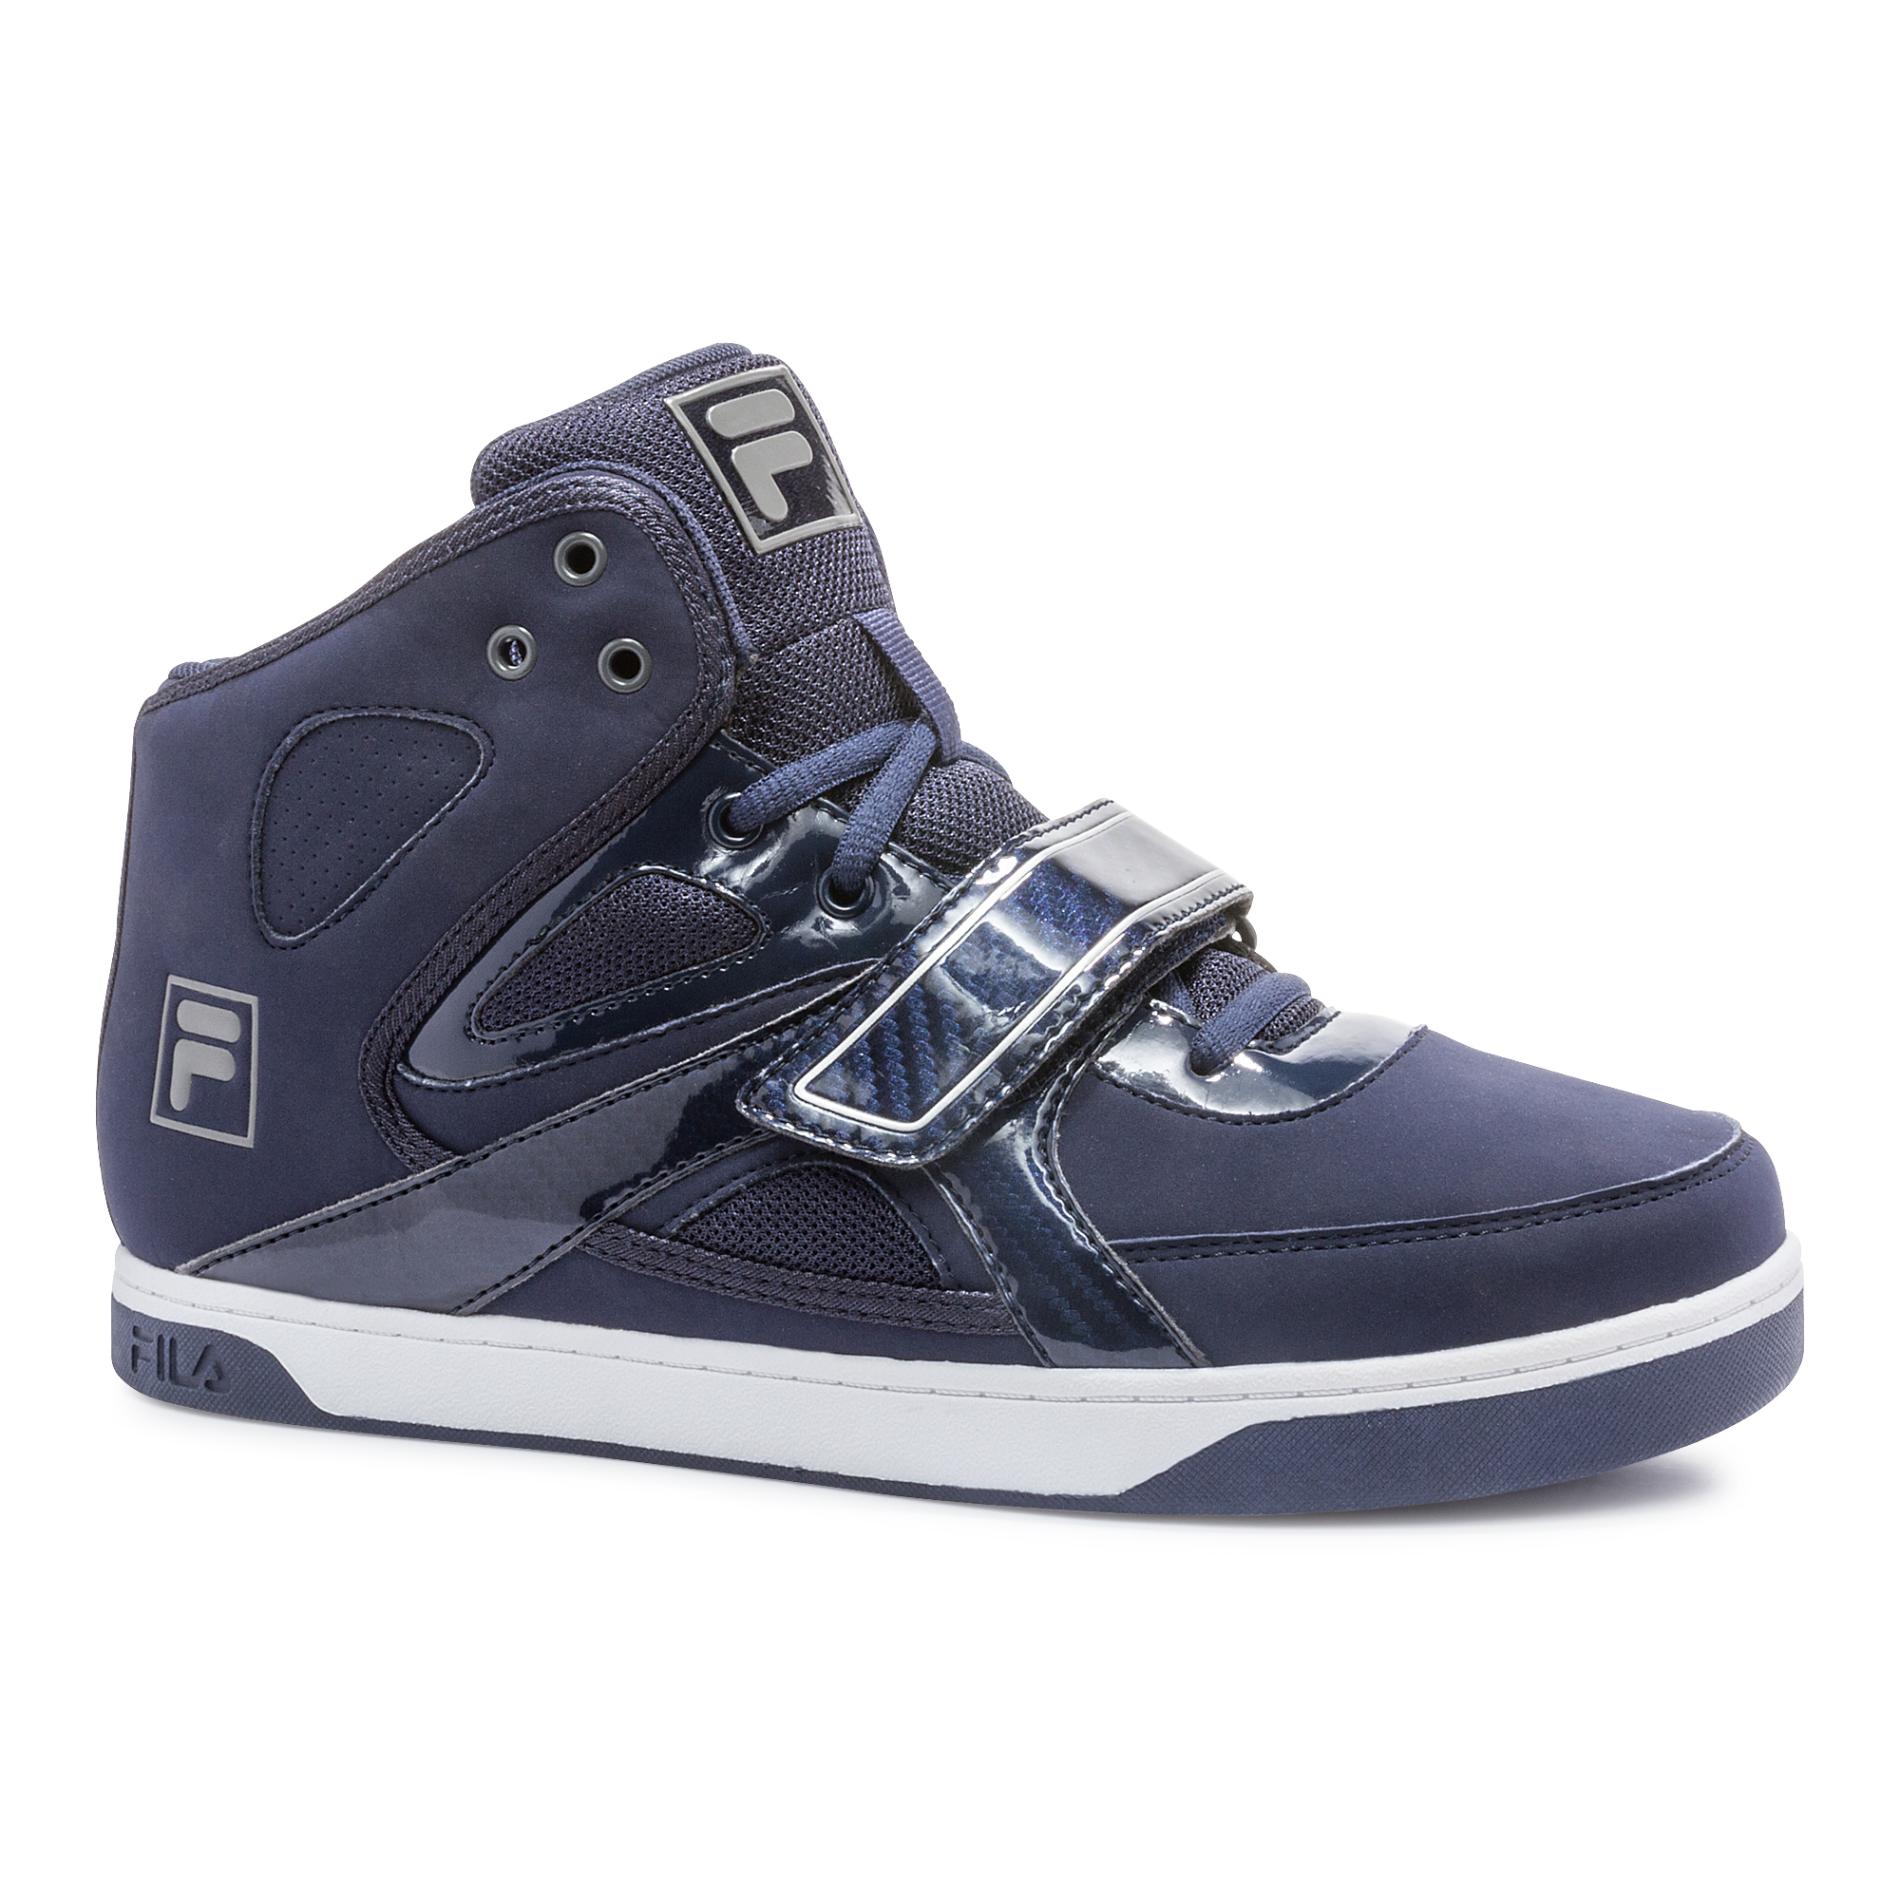 Fila Men's Underdog 2 Sneaker - Navy Blue